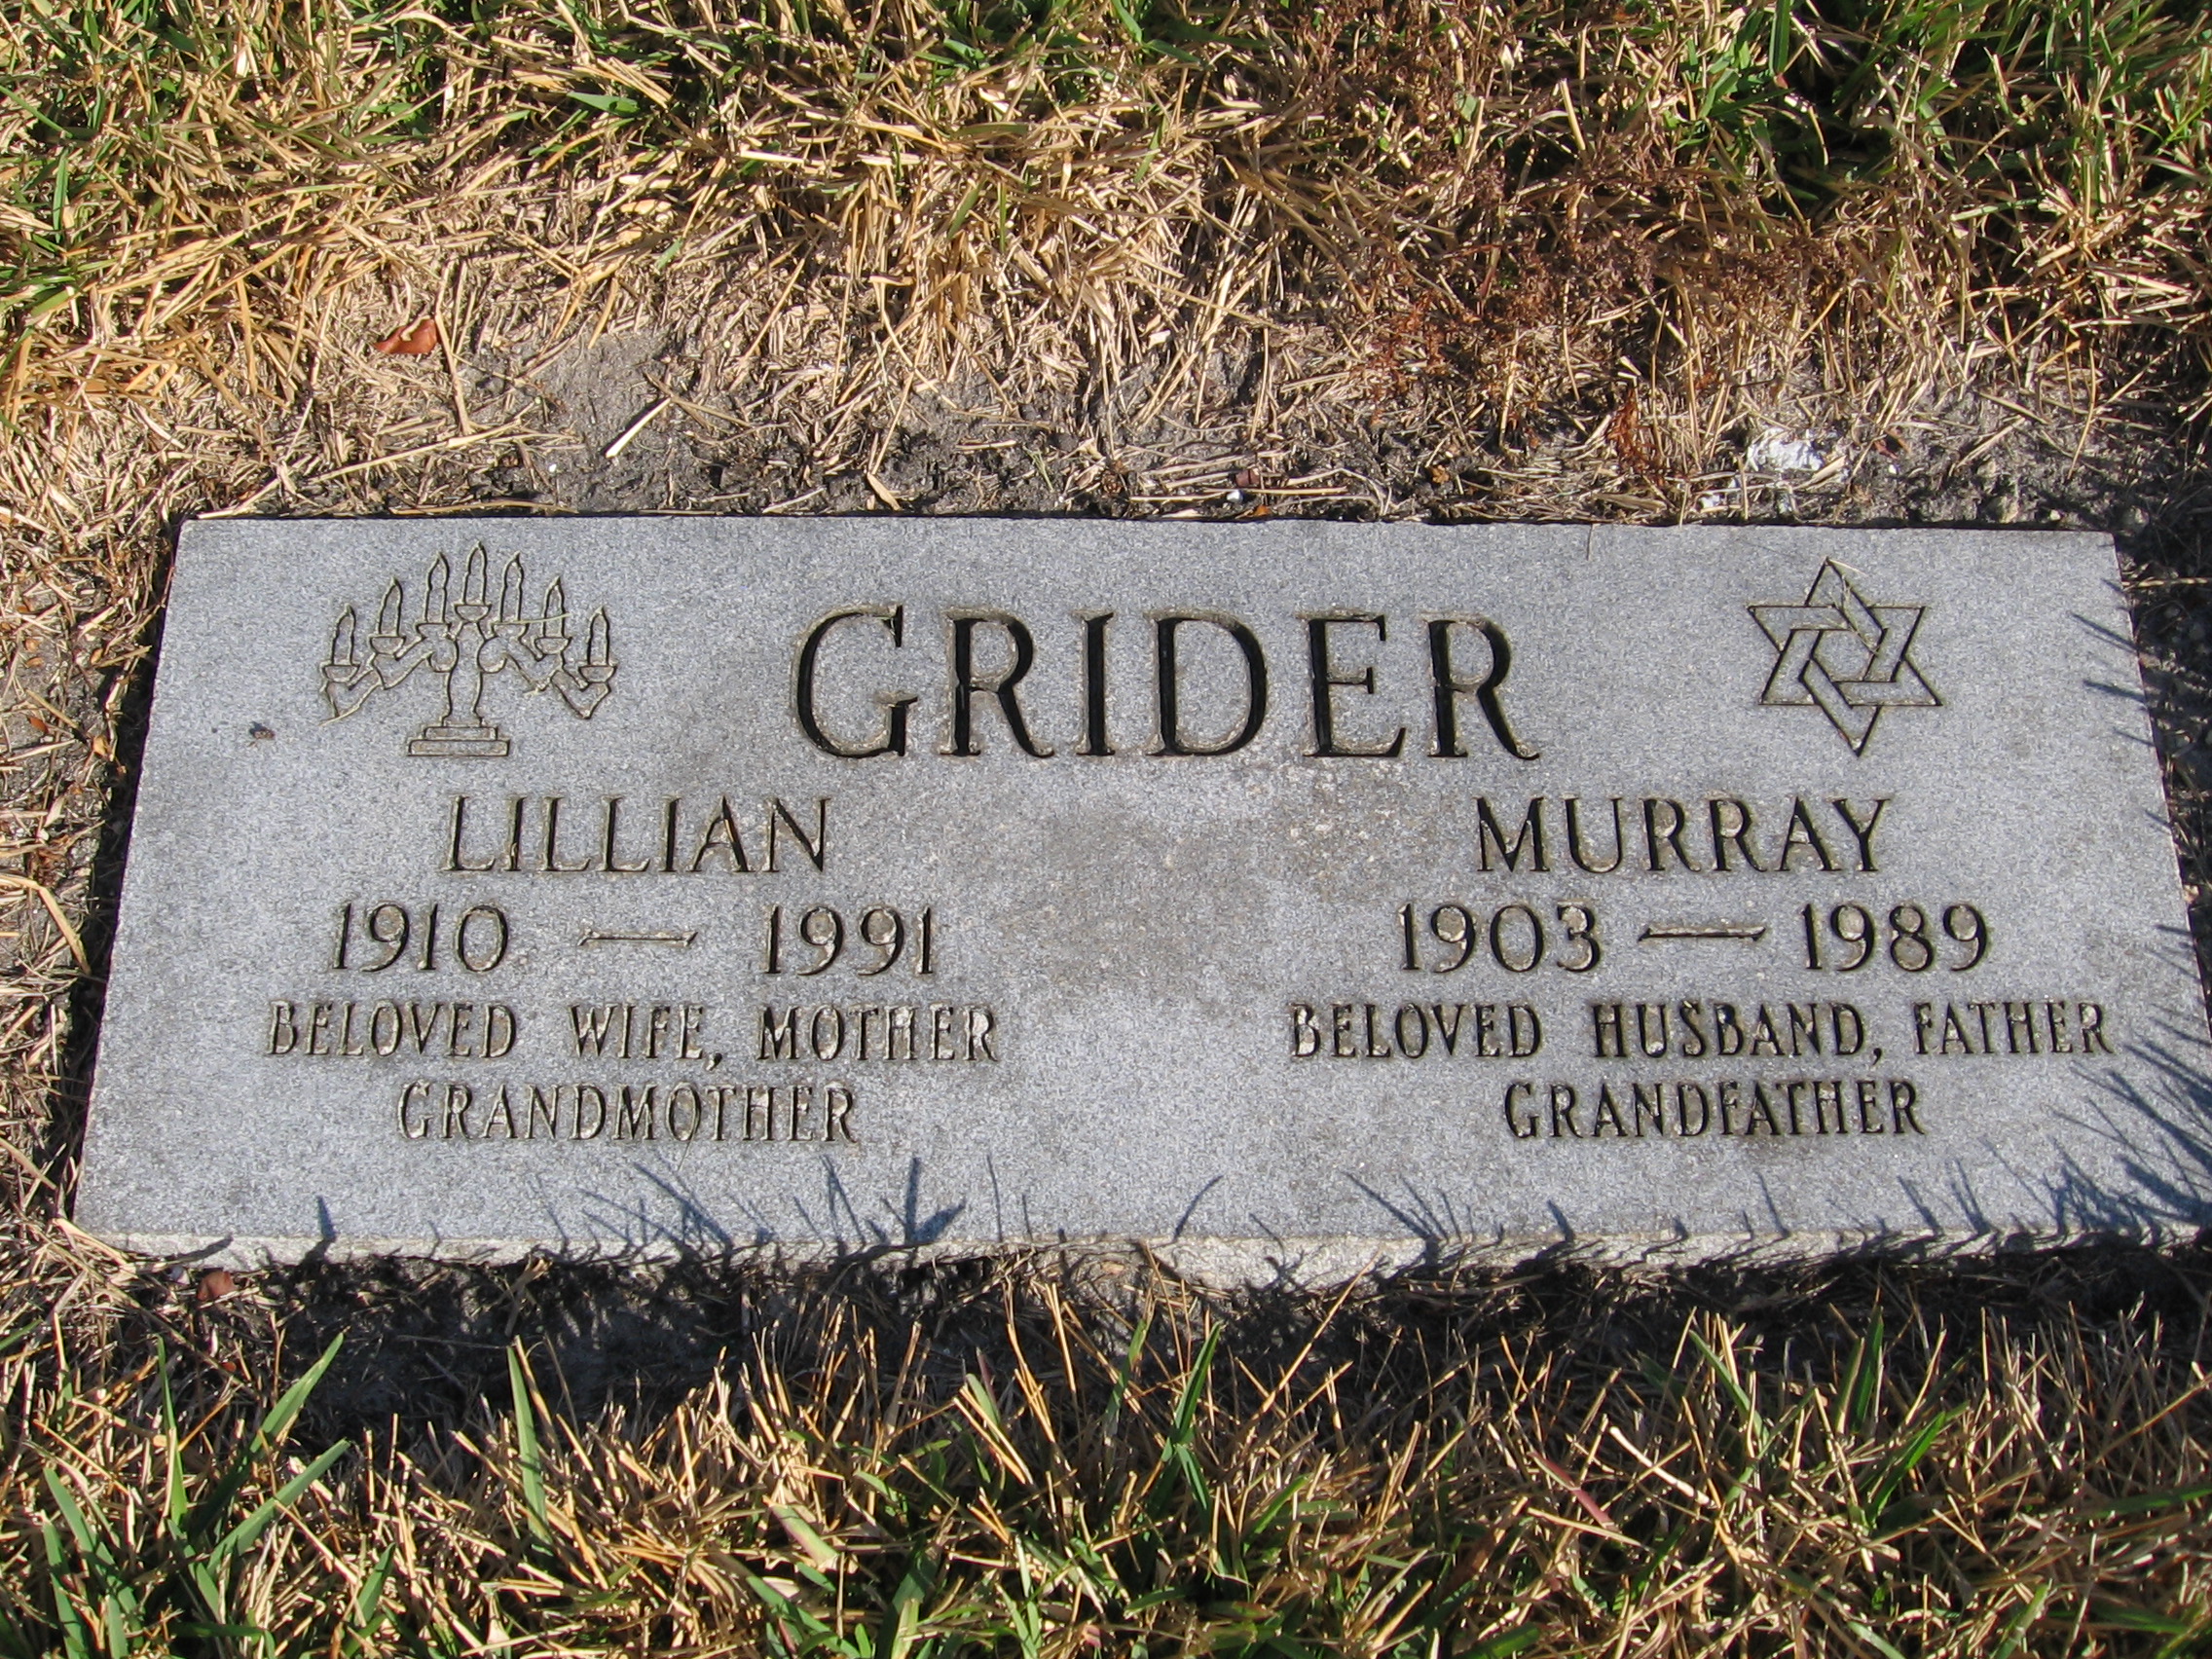 Lillian Grider